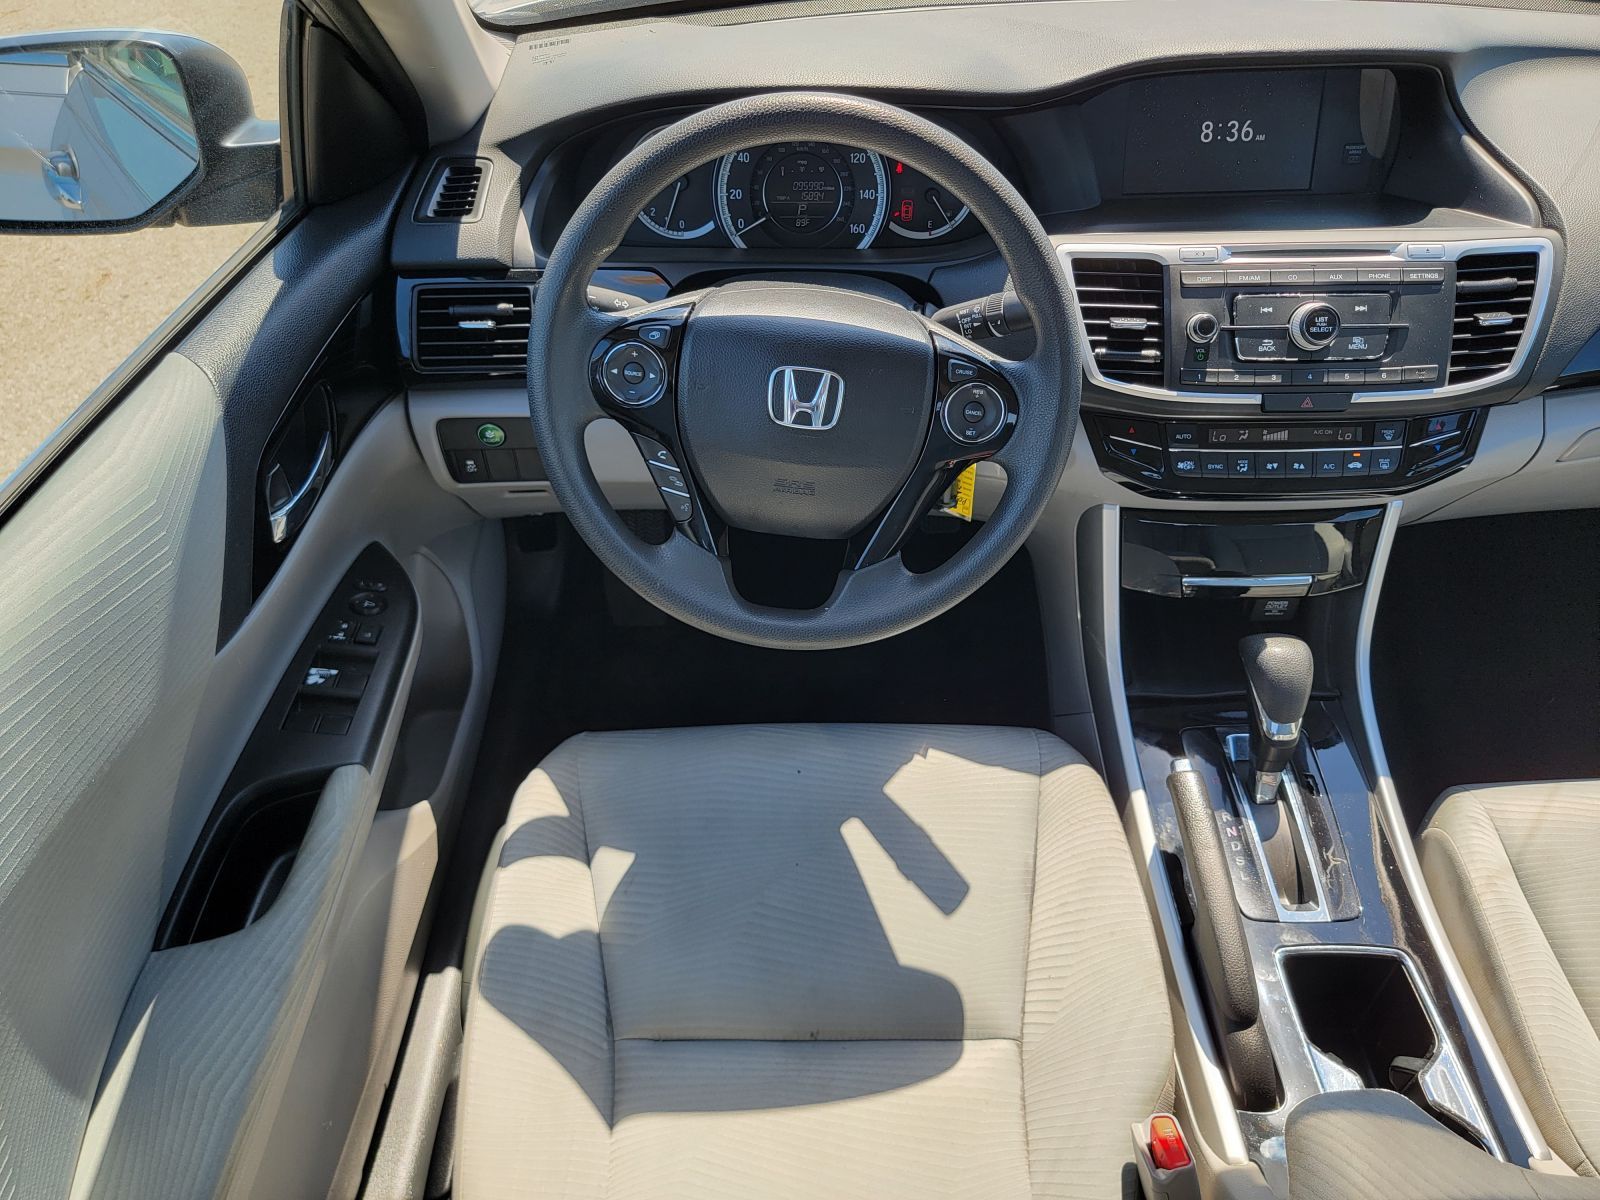 Used, 2016 Honda Accord LX, Silver, P0564-17